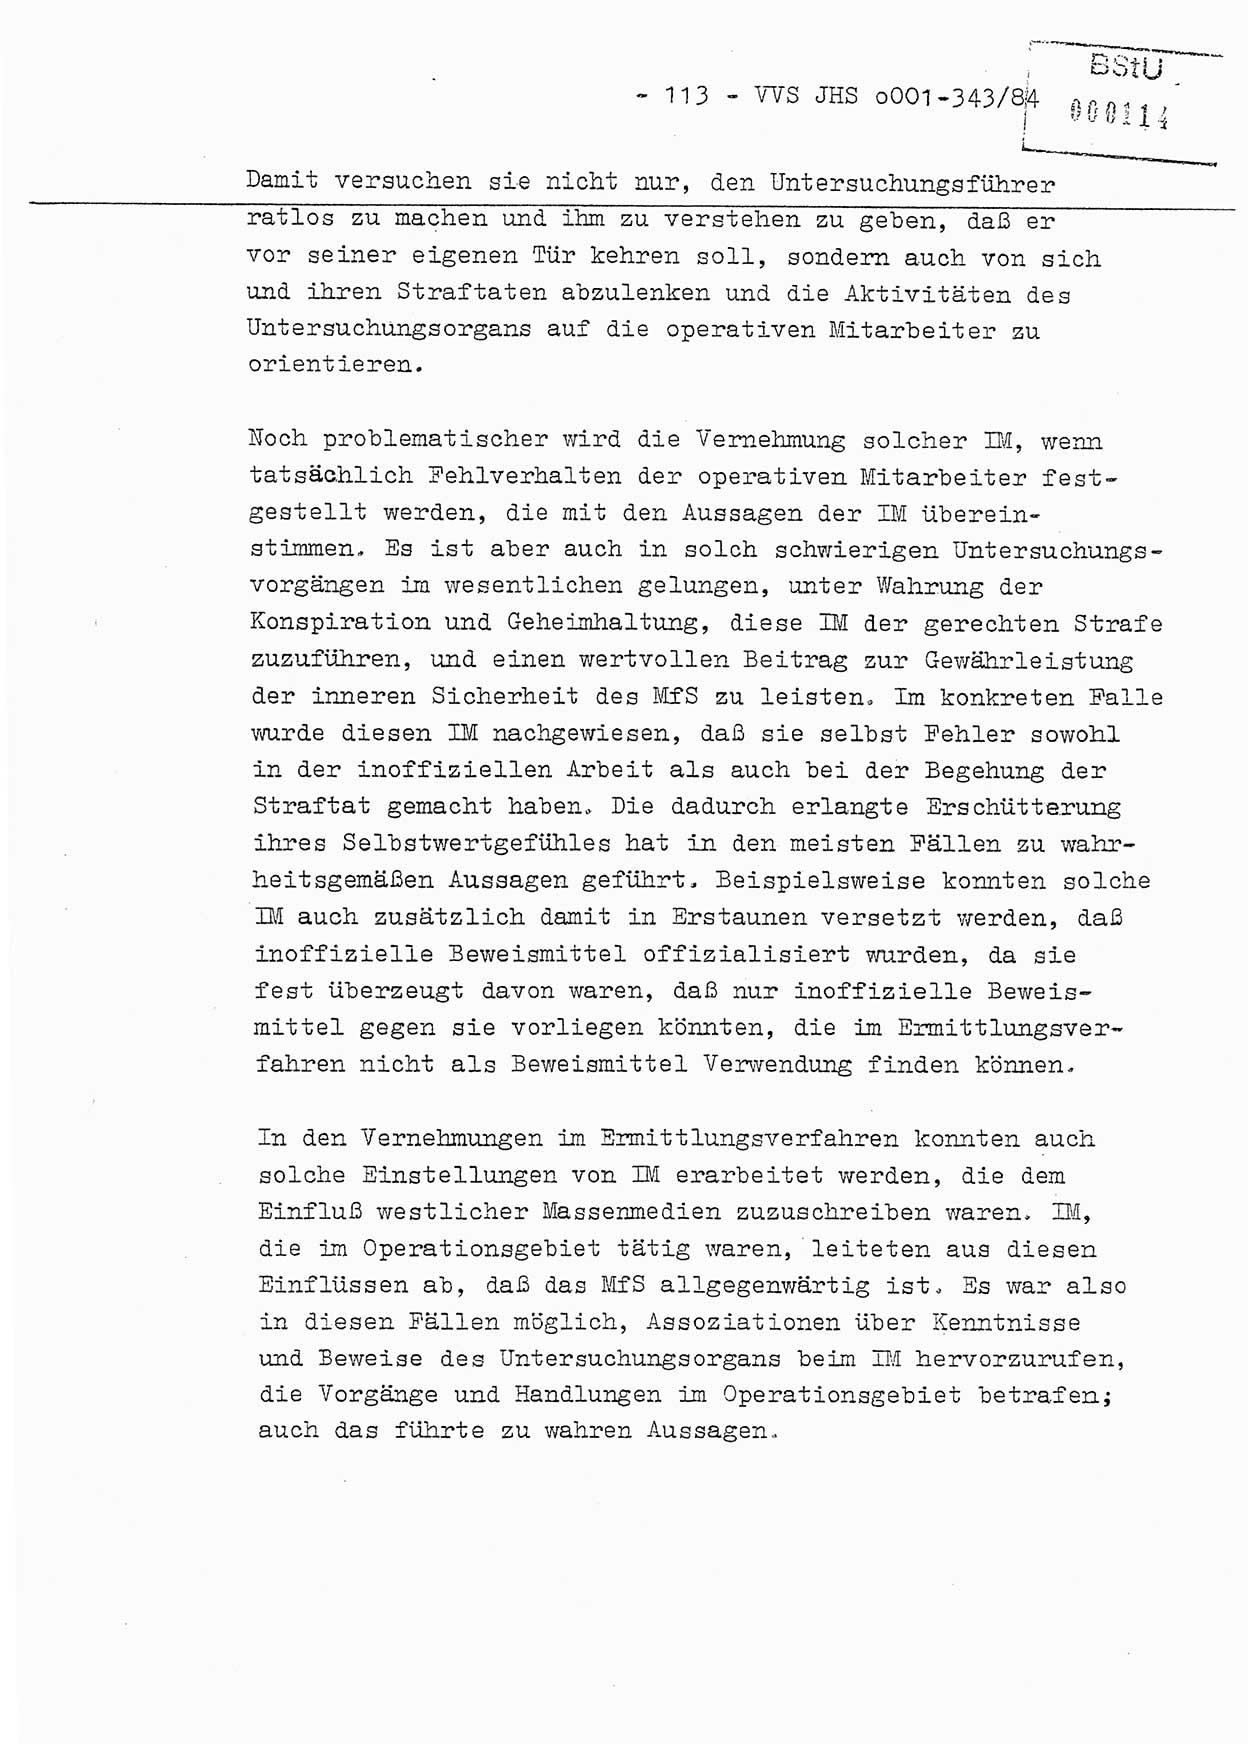 Diplomarbeit, Oberleutnant Bernd Michael (HA Ⅸ/5), Oberleutnant Peter Felber (HA IX/5), Ministerium für Staatssicherheit (MfS) [Deutsche Demokratische Republik (DDR)], Juristische Hochschule (JHS), Vertrauliche Verschlußsache (VVS) o001-343/84, Potsdam 1985, Seite 113 (Dipl.-Arb. MfS DDR JHS VVS o001-343/84 1985, S. 113)